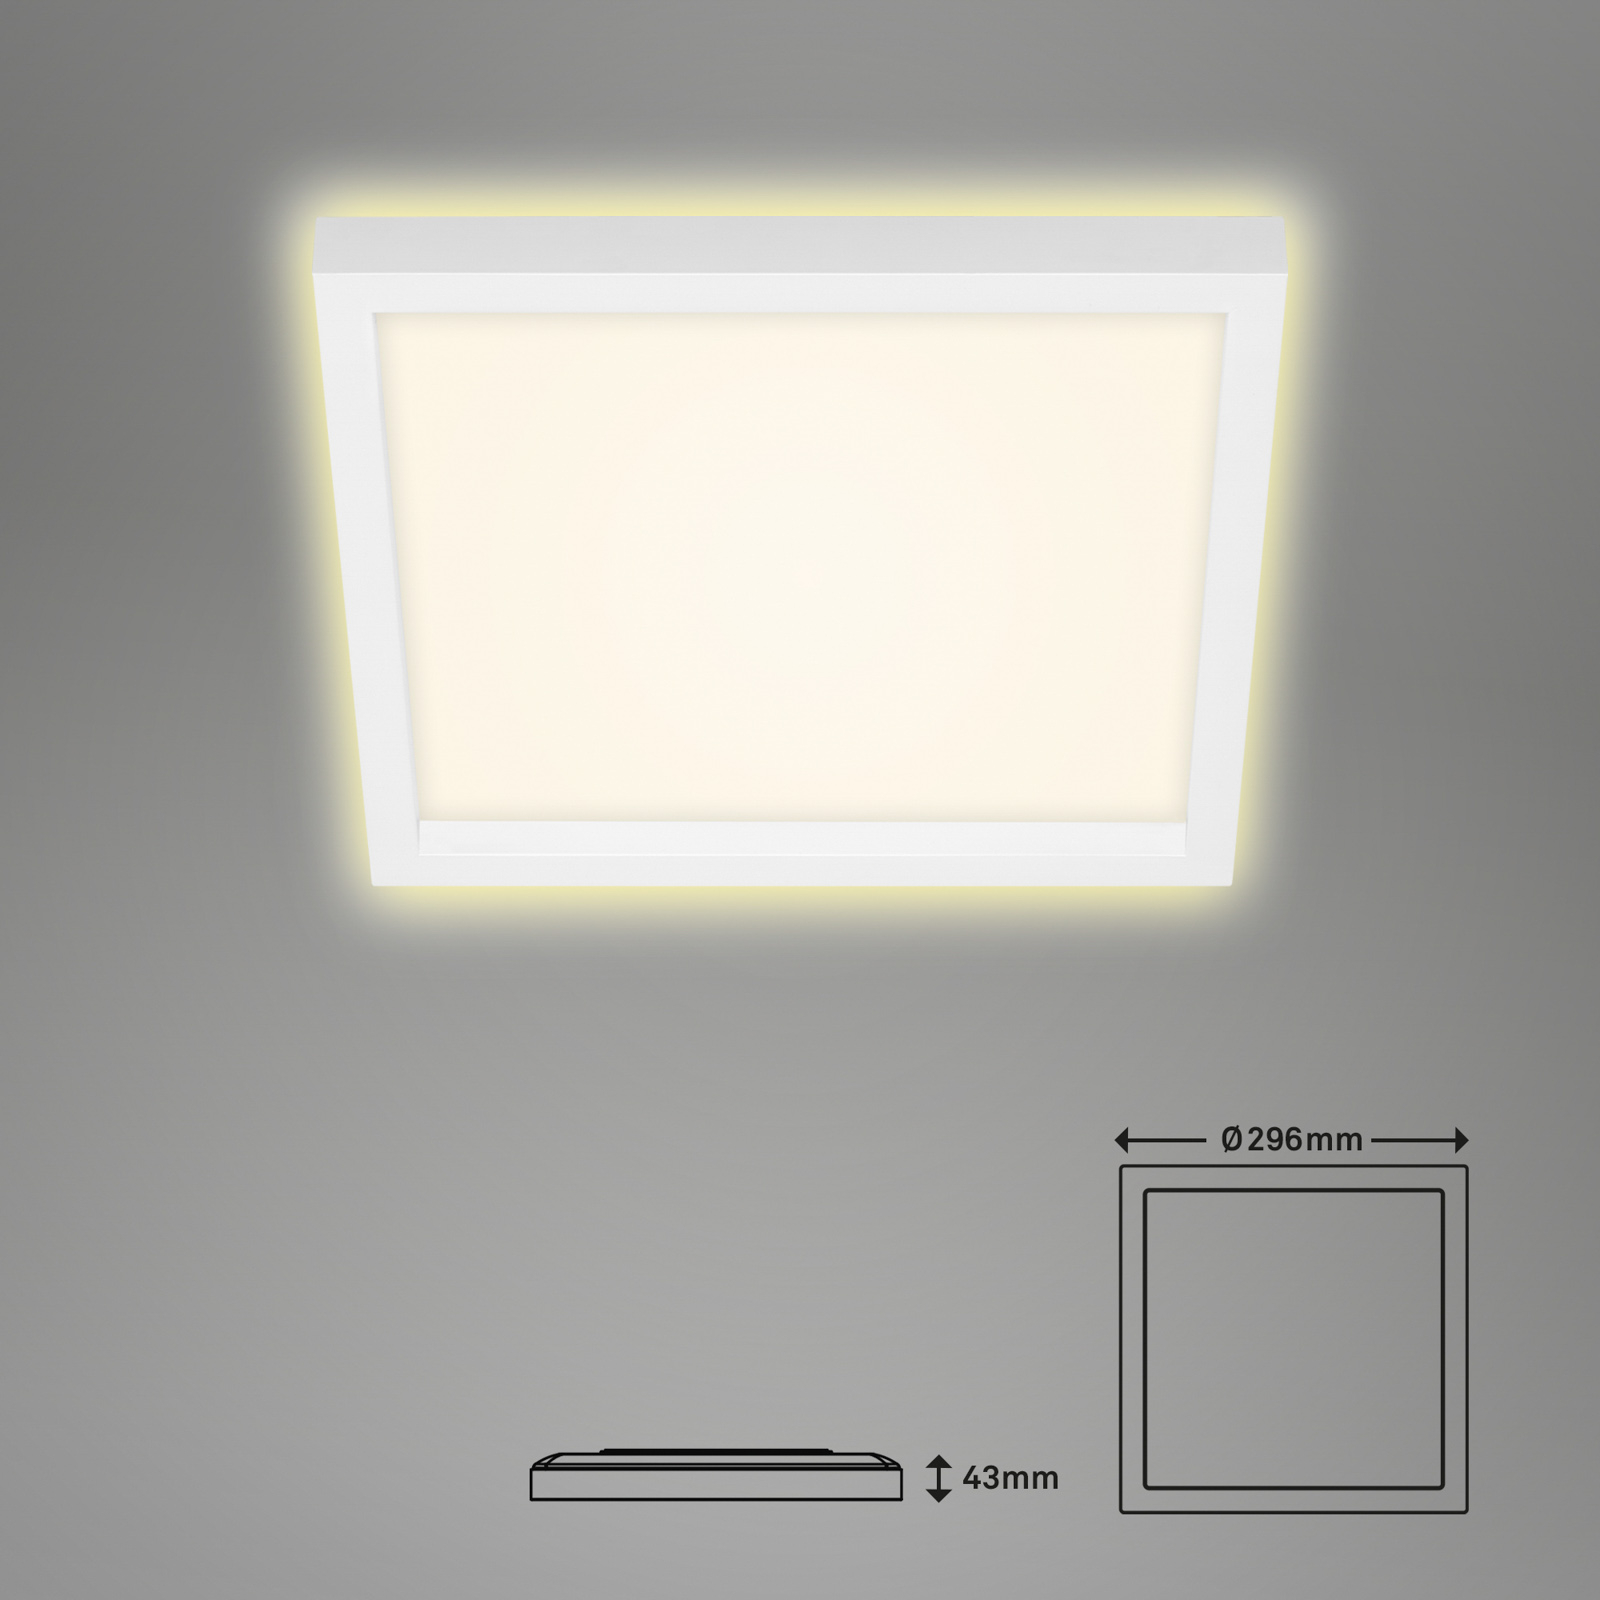 LED plafondlamp 7362, 29 x 29 cm, wit